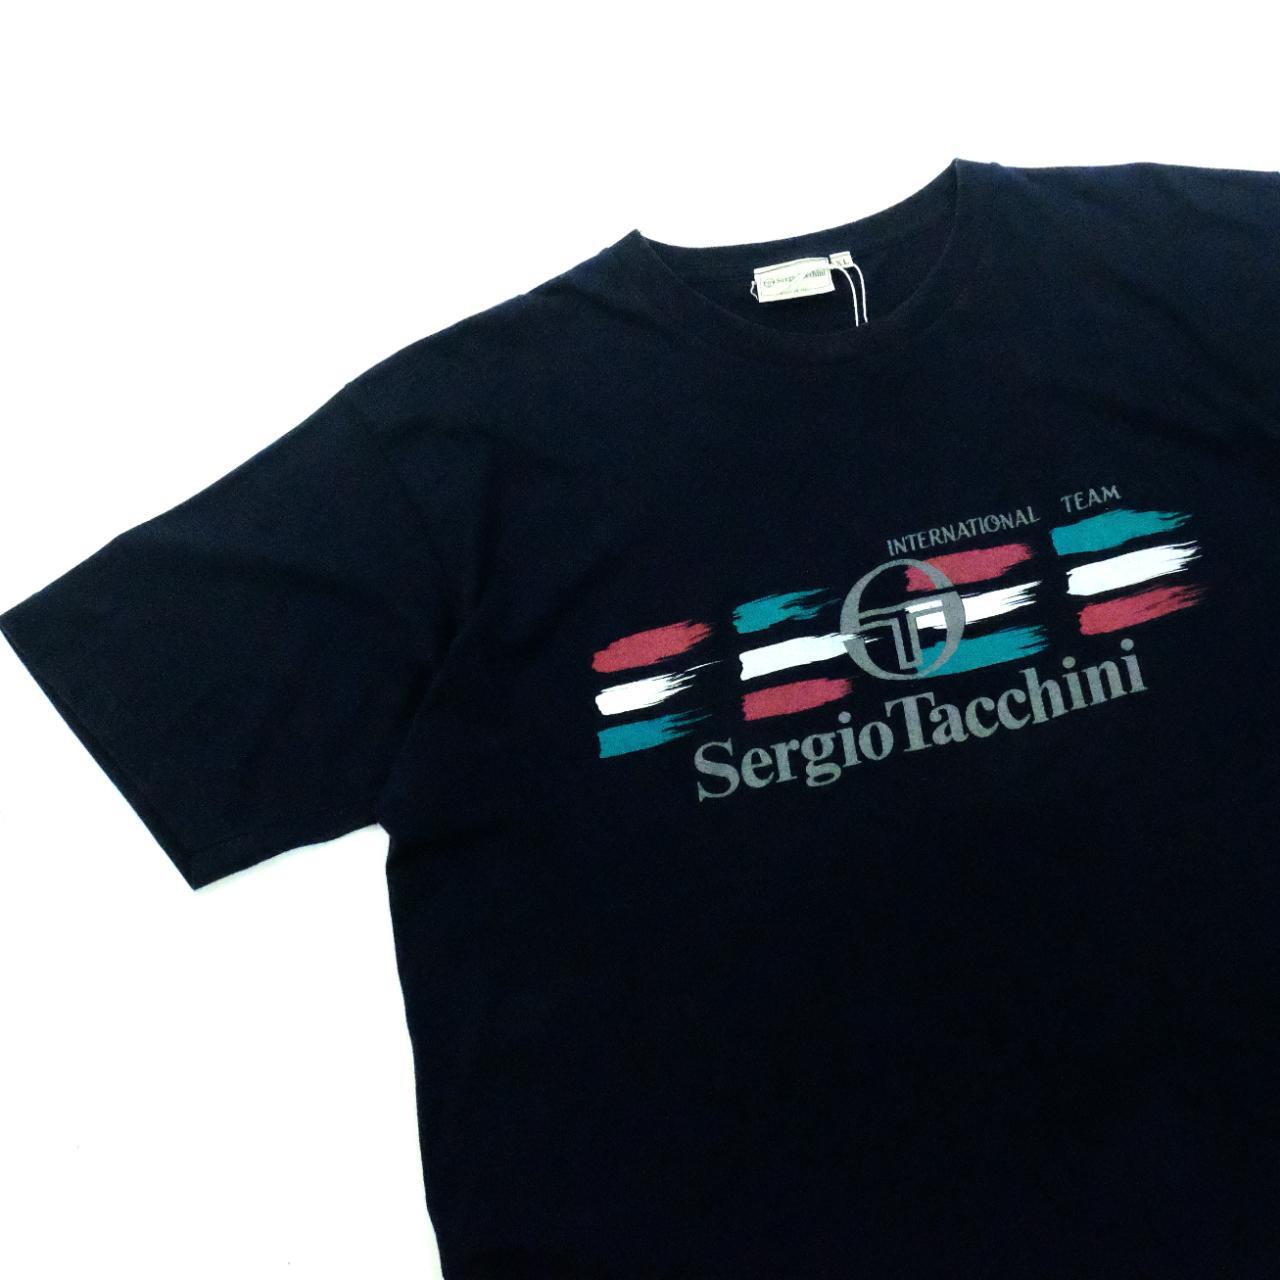 Sergio Tacchini single stitch T-shirt